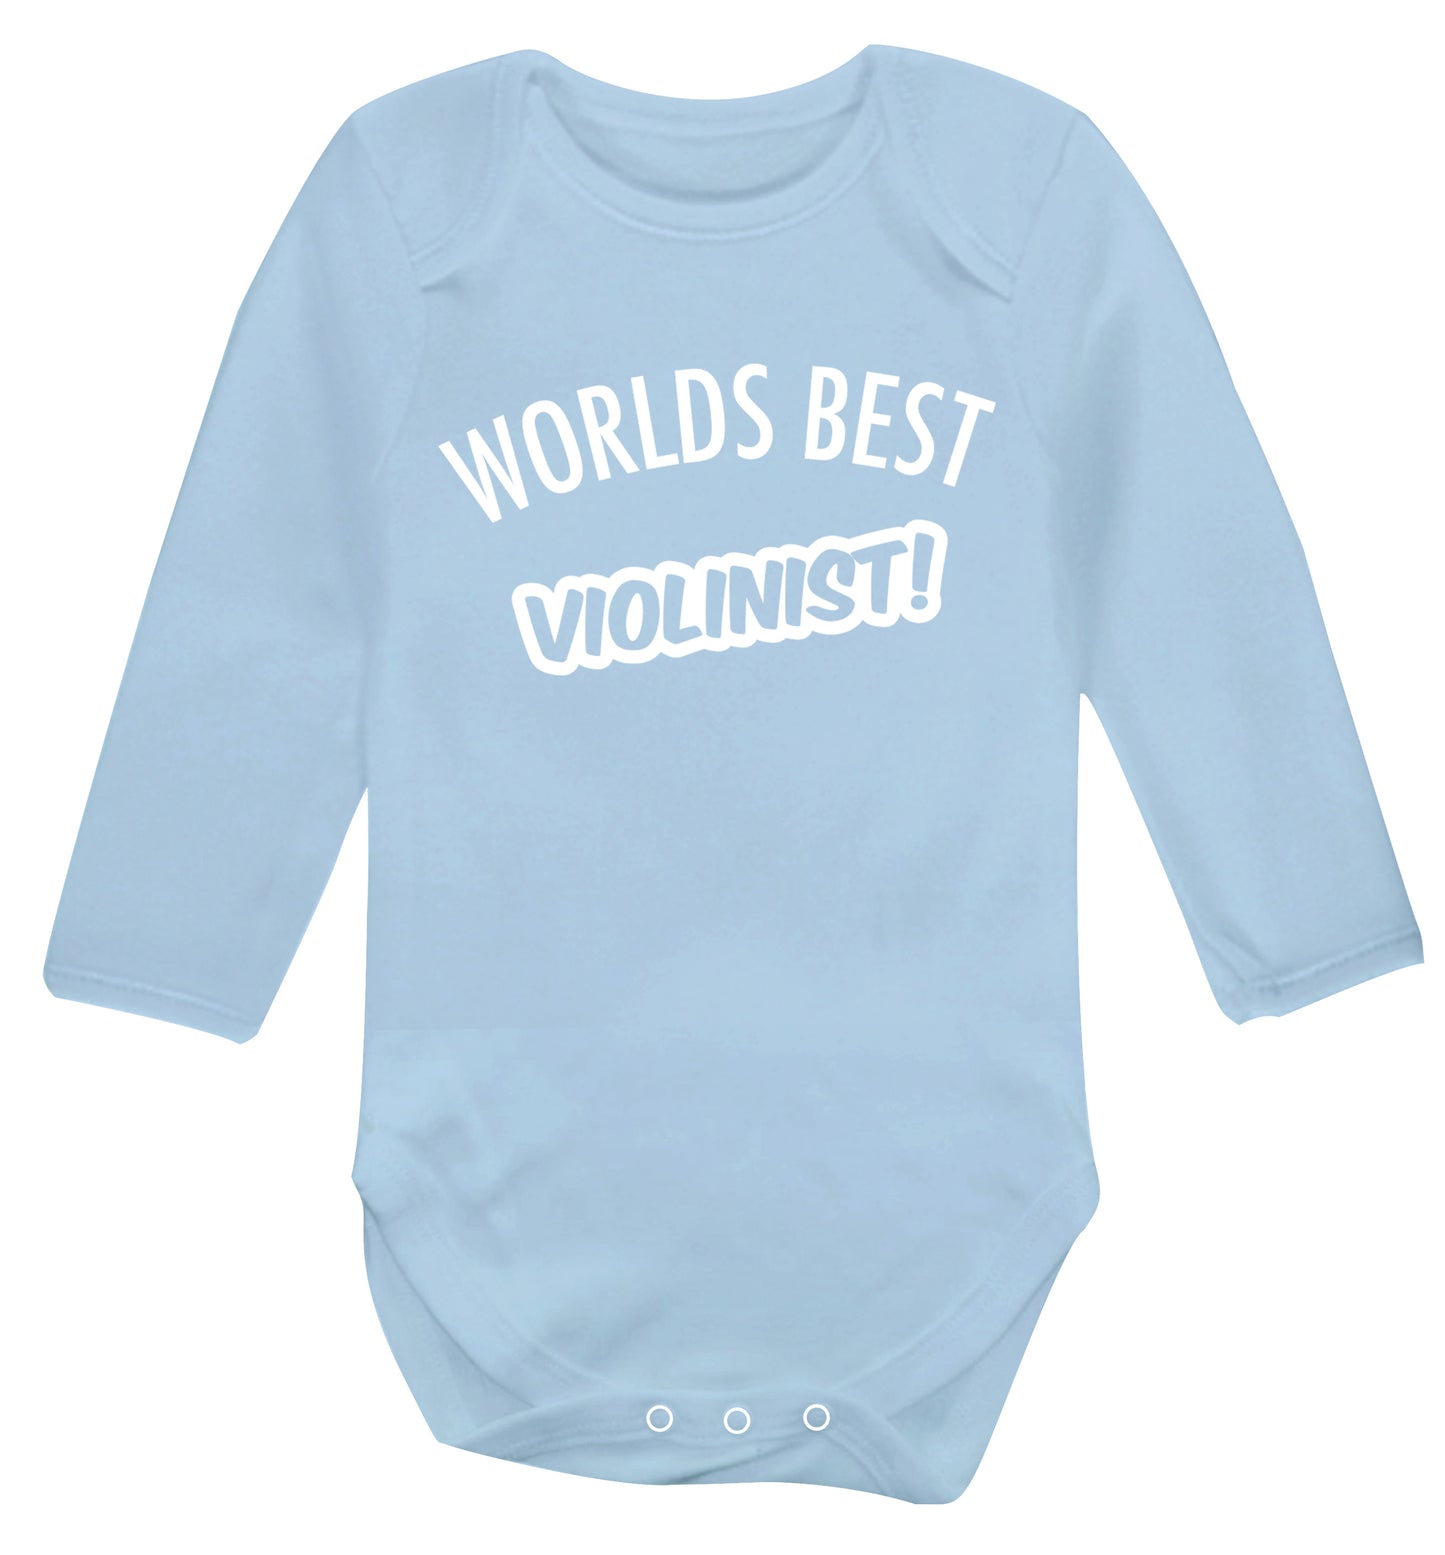 Worlds best violinist Baby Vest long sleeved pale blue 6-12 months